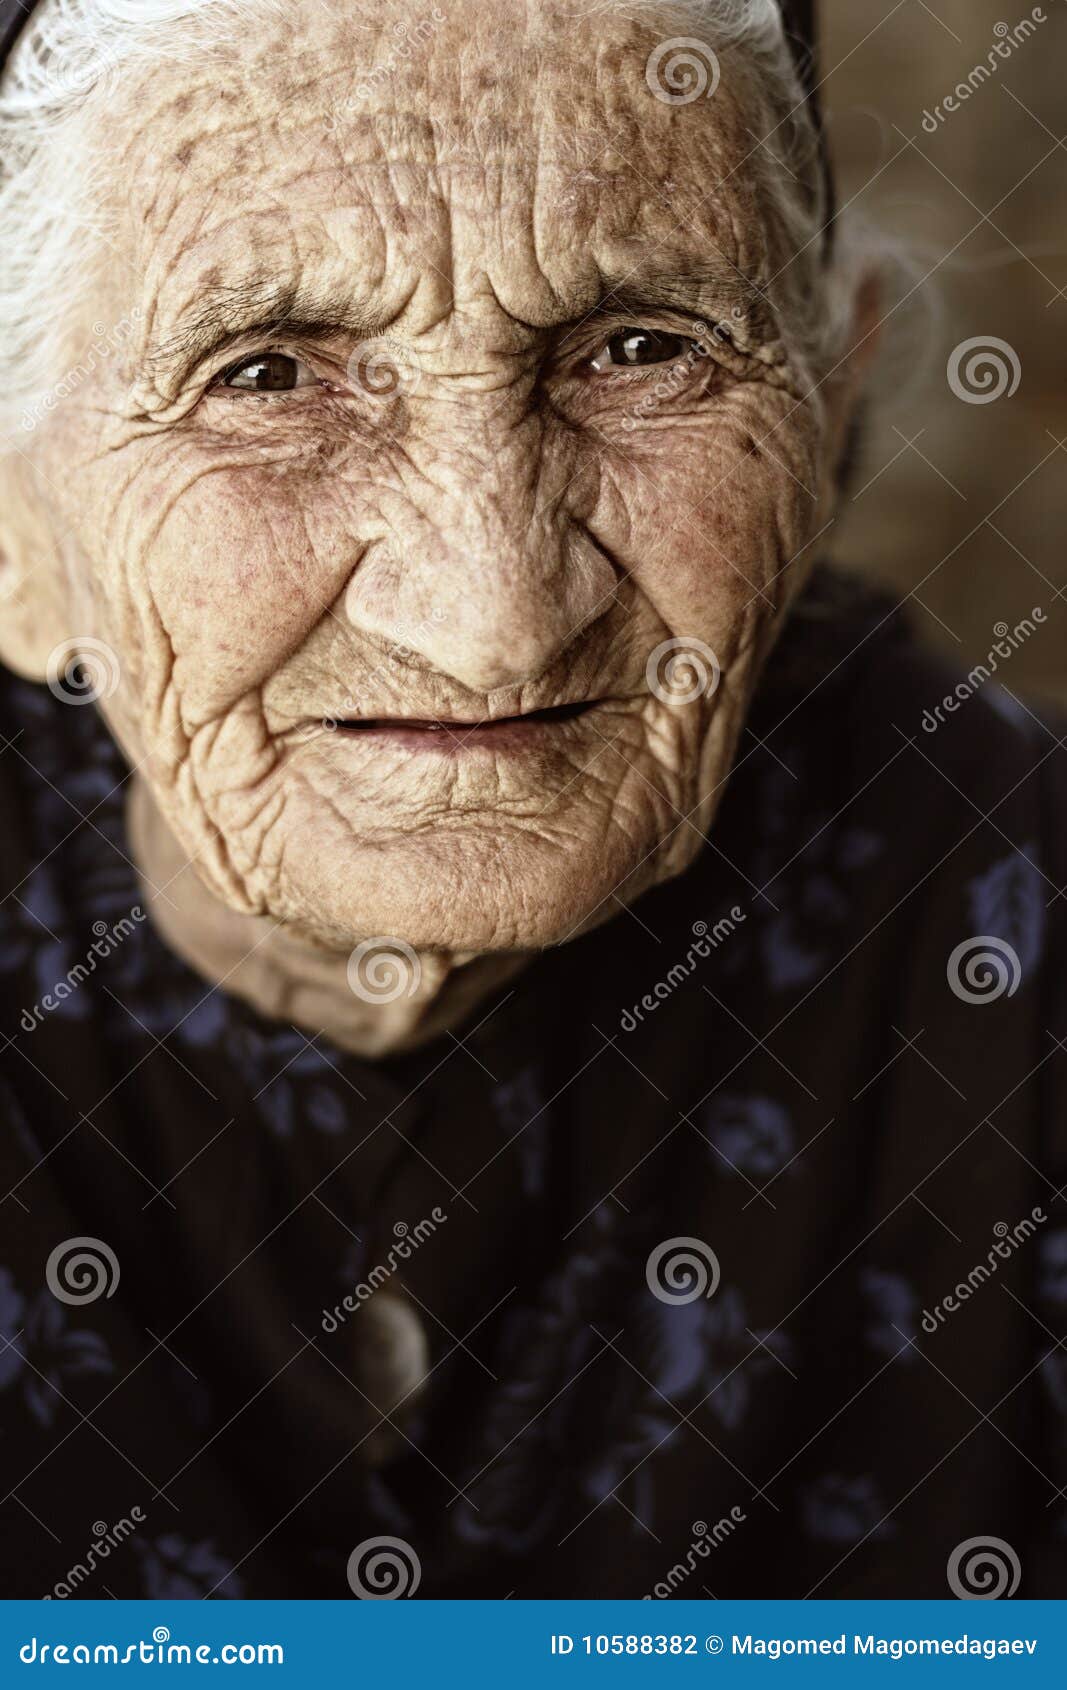 Gaze of senior woman closeup face photo outdoors